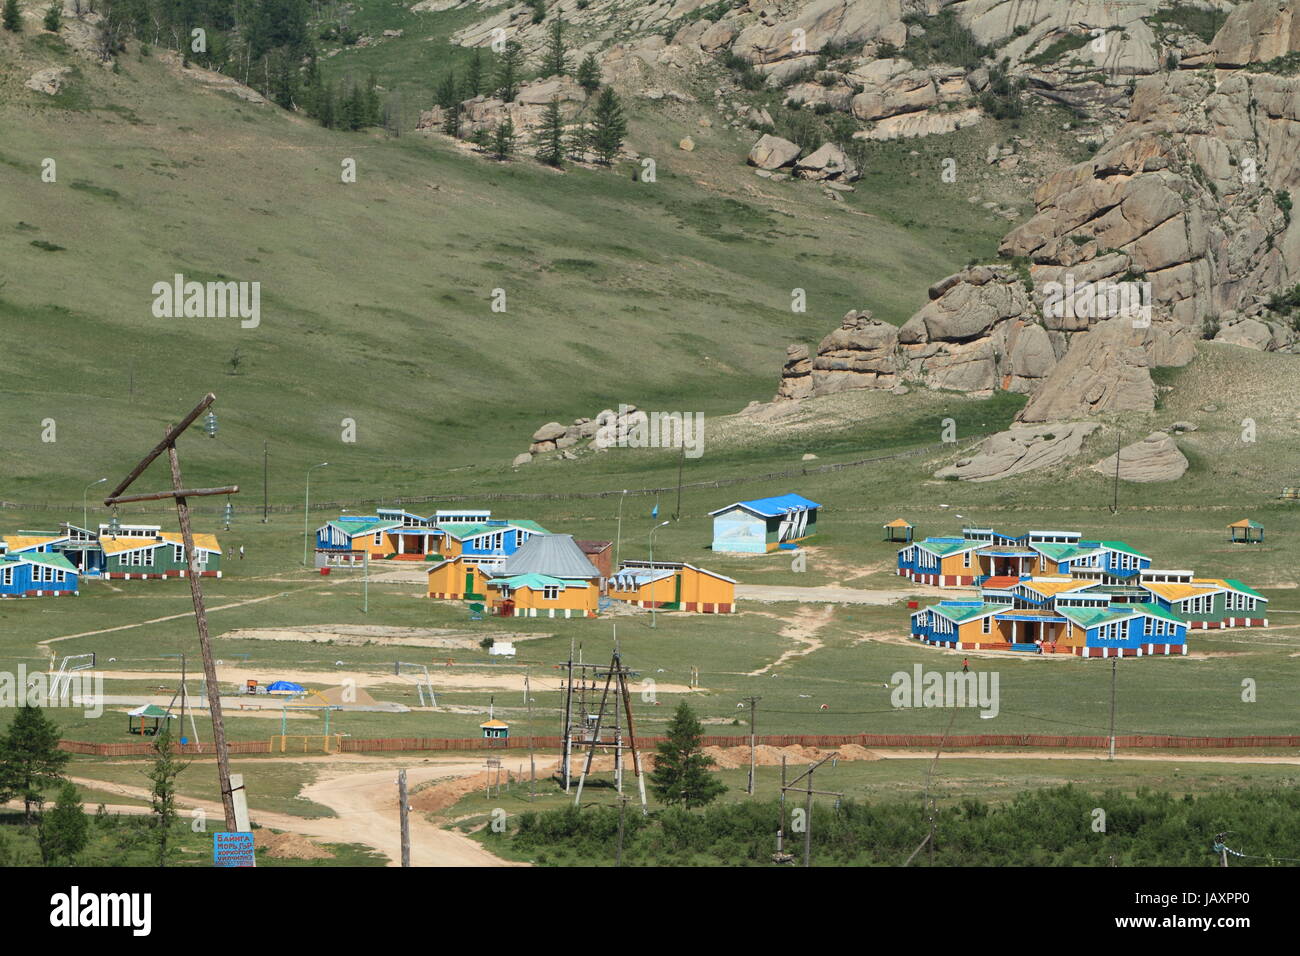 yurt tent village in mongolia Stock Photo